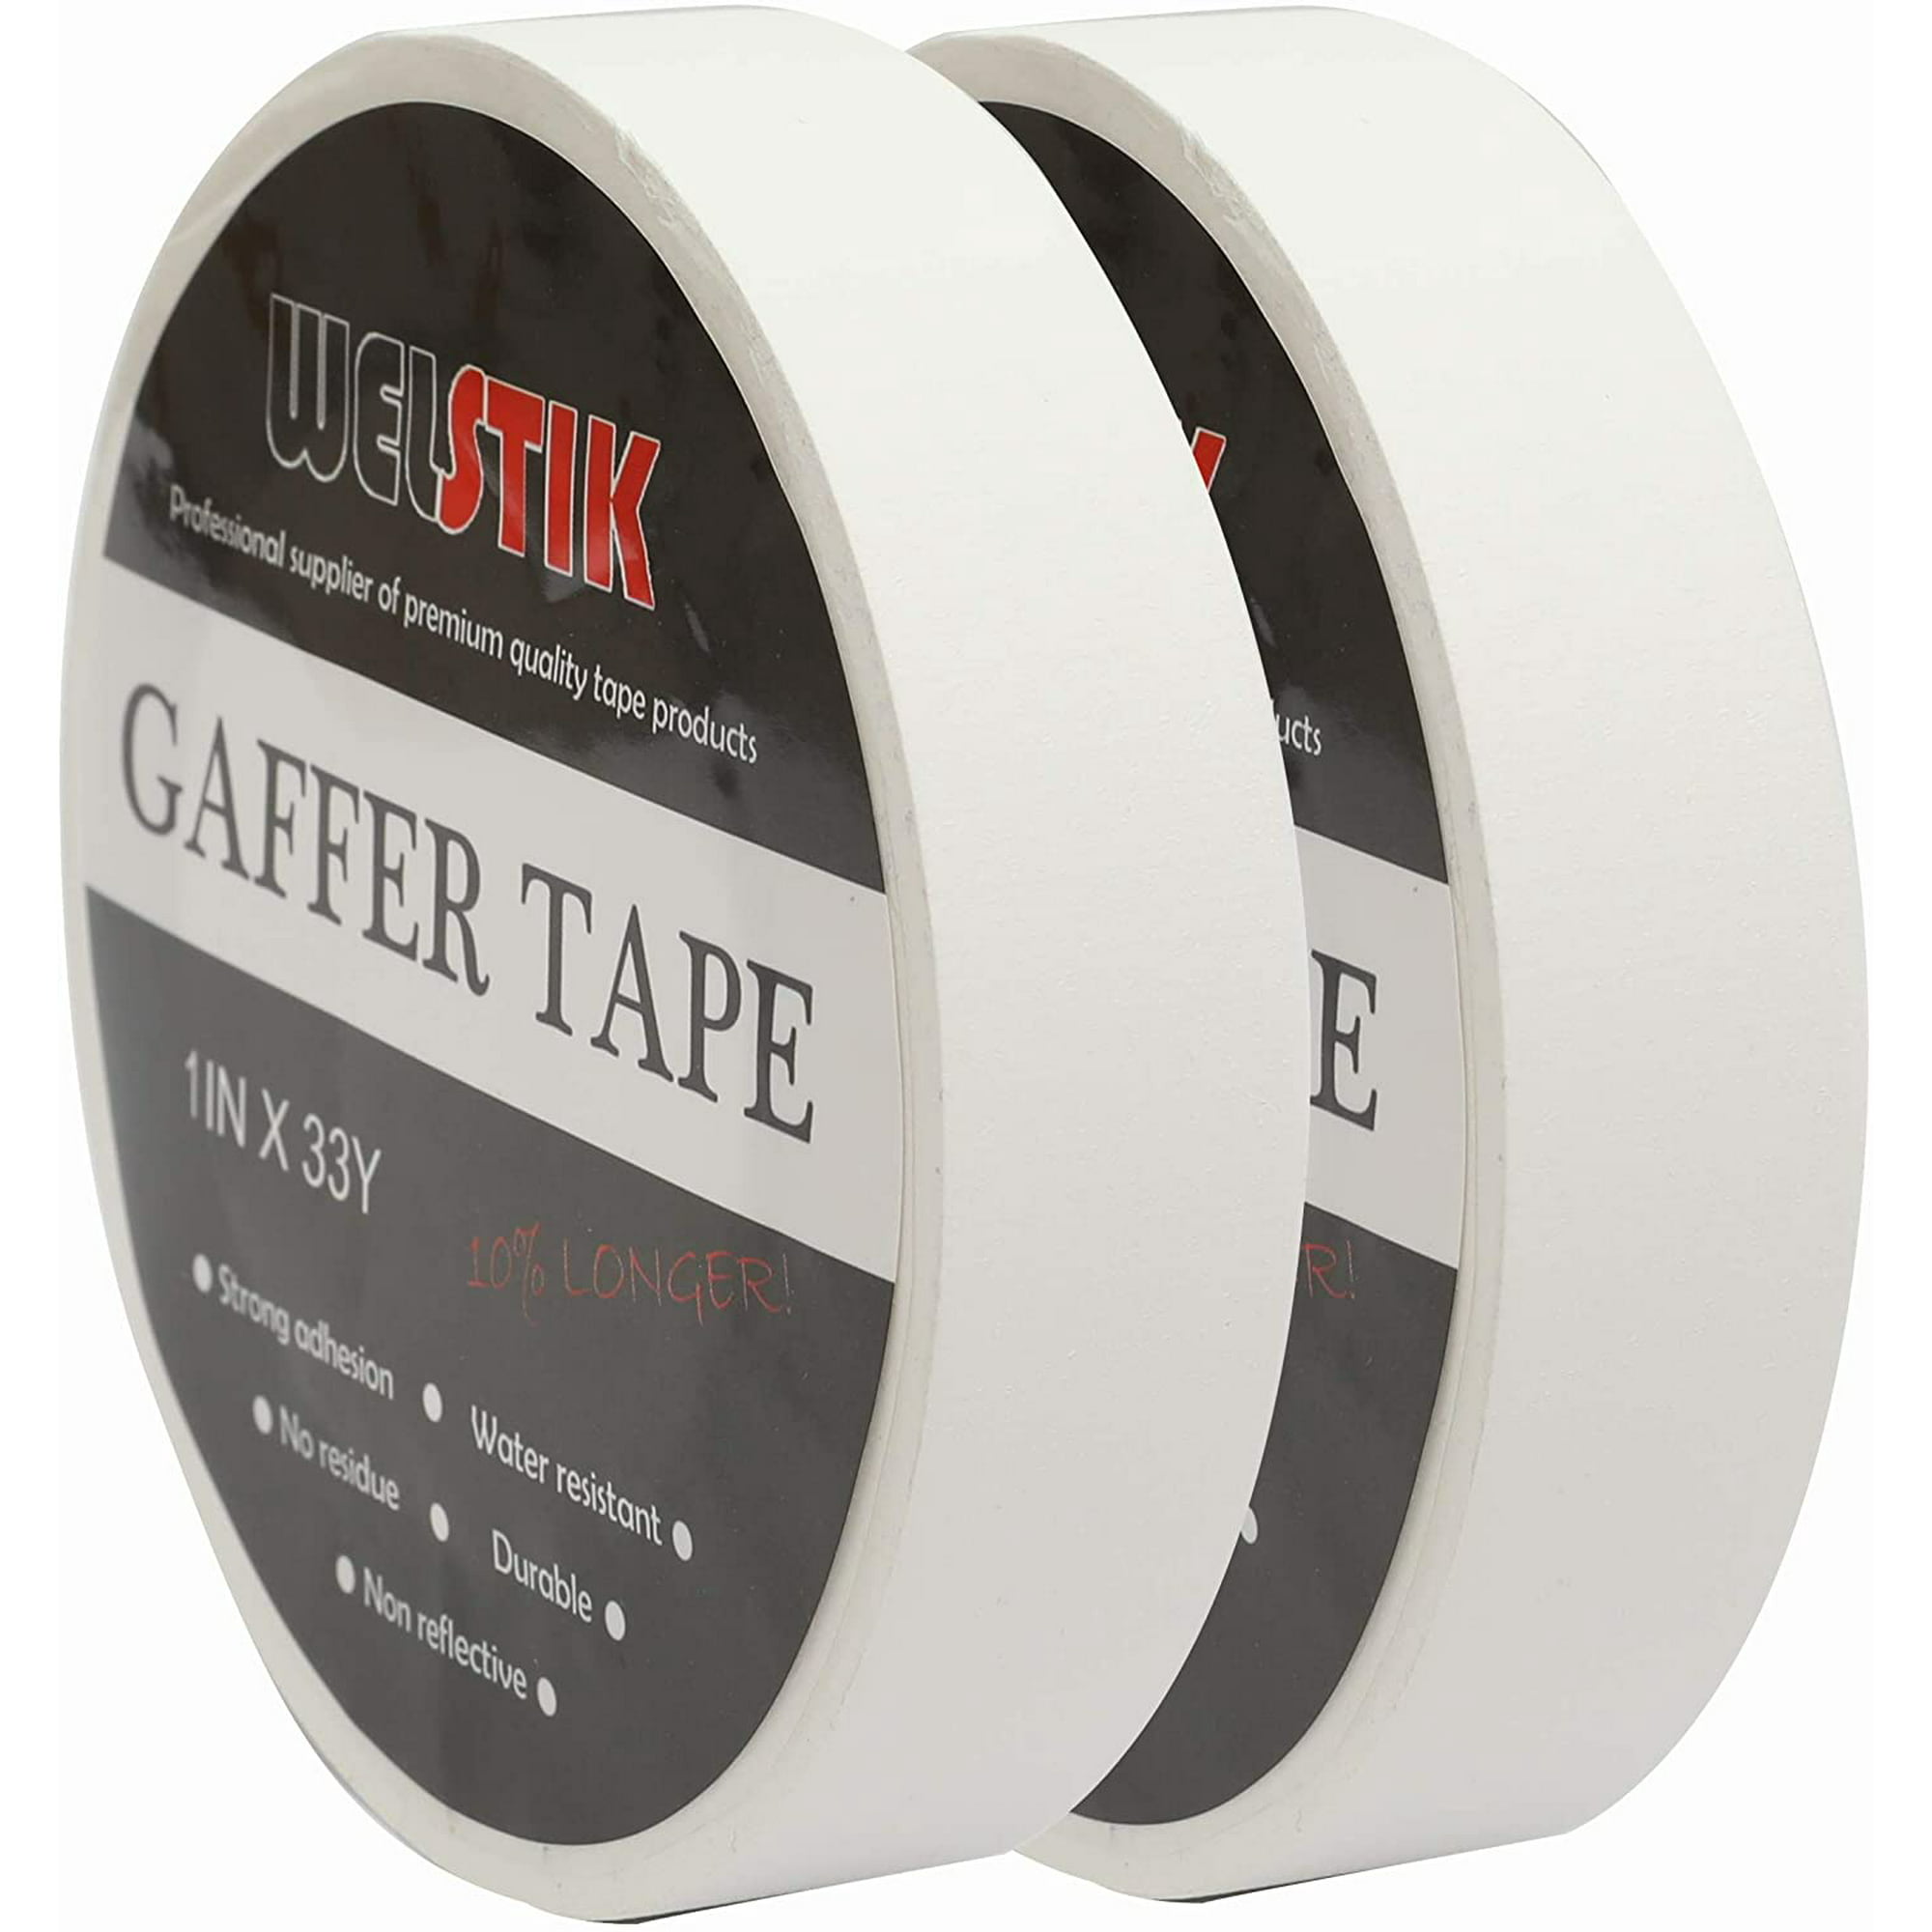 WELSTIK 2 Pack Black Gaffers Tape,2 X 33 Yards-10% Longer-Heavy Duty  Gaffers Tape,Waterproof Matte Finish Gaff Tape,Residue Free,Non  Reflective,Easy